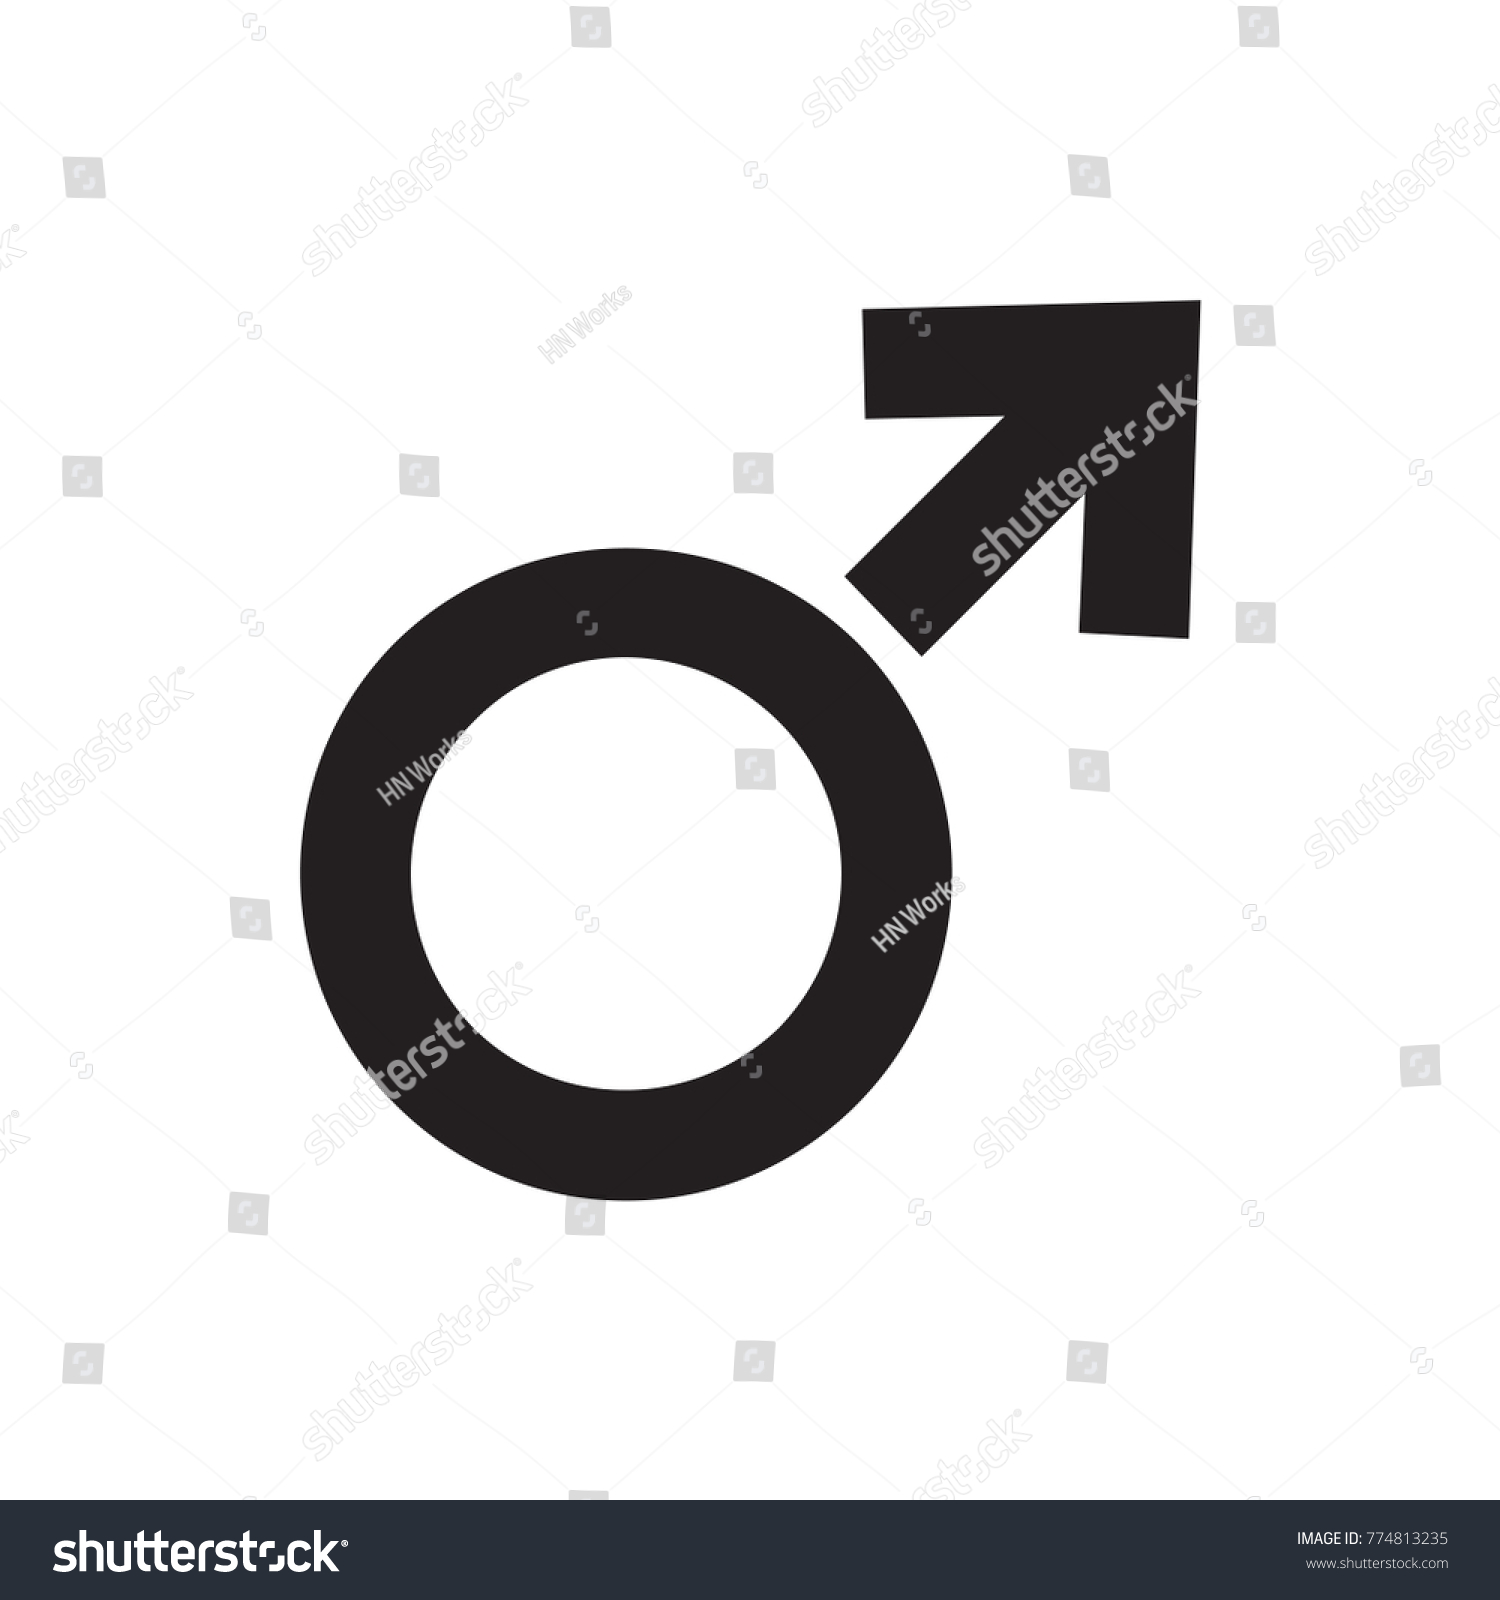 man symbol icon illustration isolated vector sign symbol #774813235